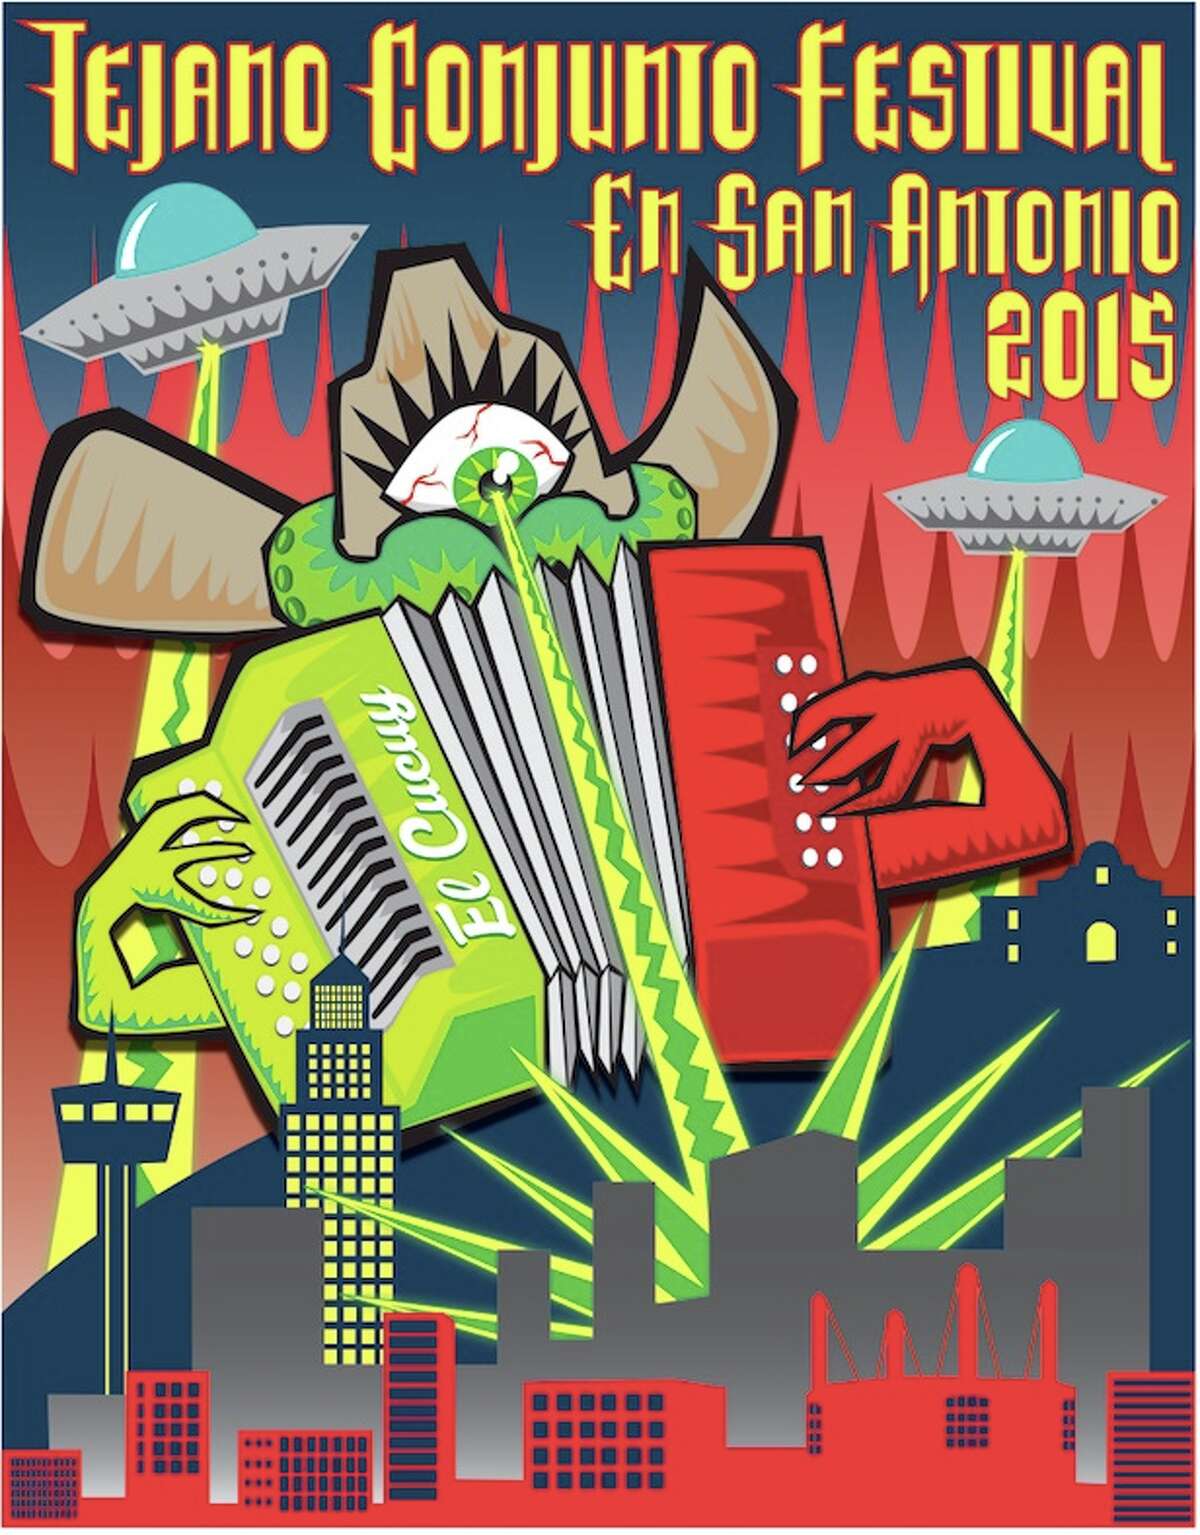 Artist John Medina designed the 2015 Tejano Conjunto Festival poster.